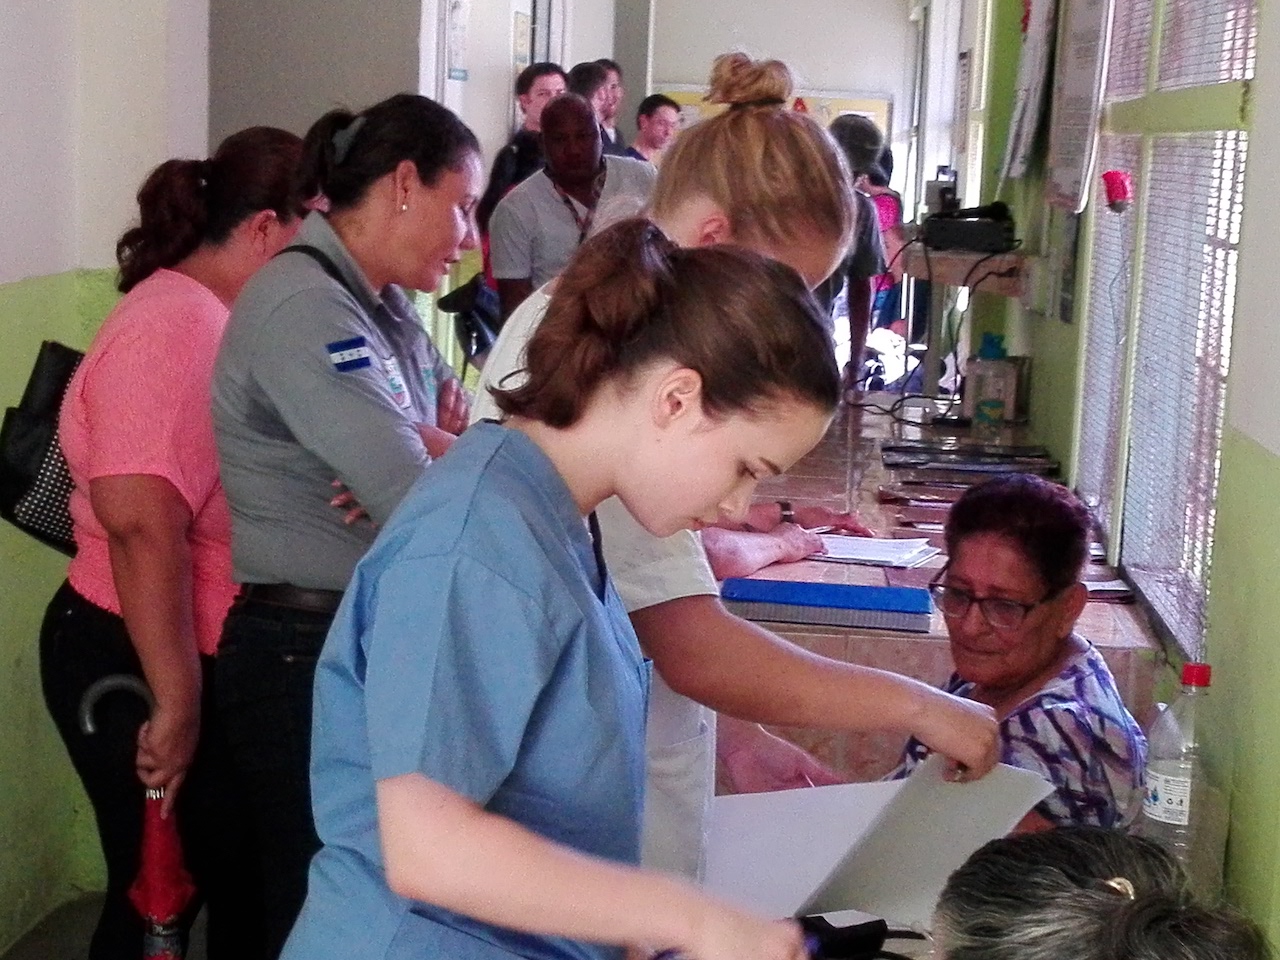 Volunteer in Honduras La Ceiba Pre Medical Student Abigail C